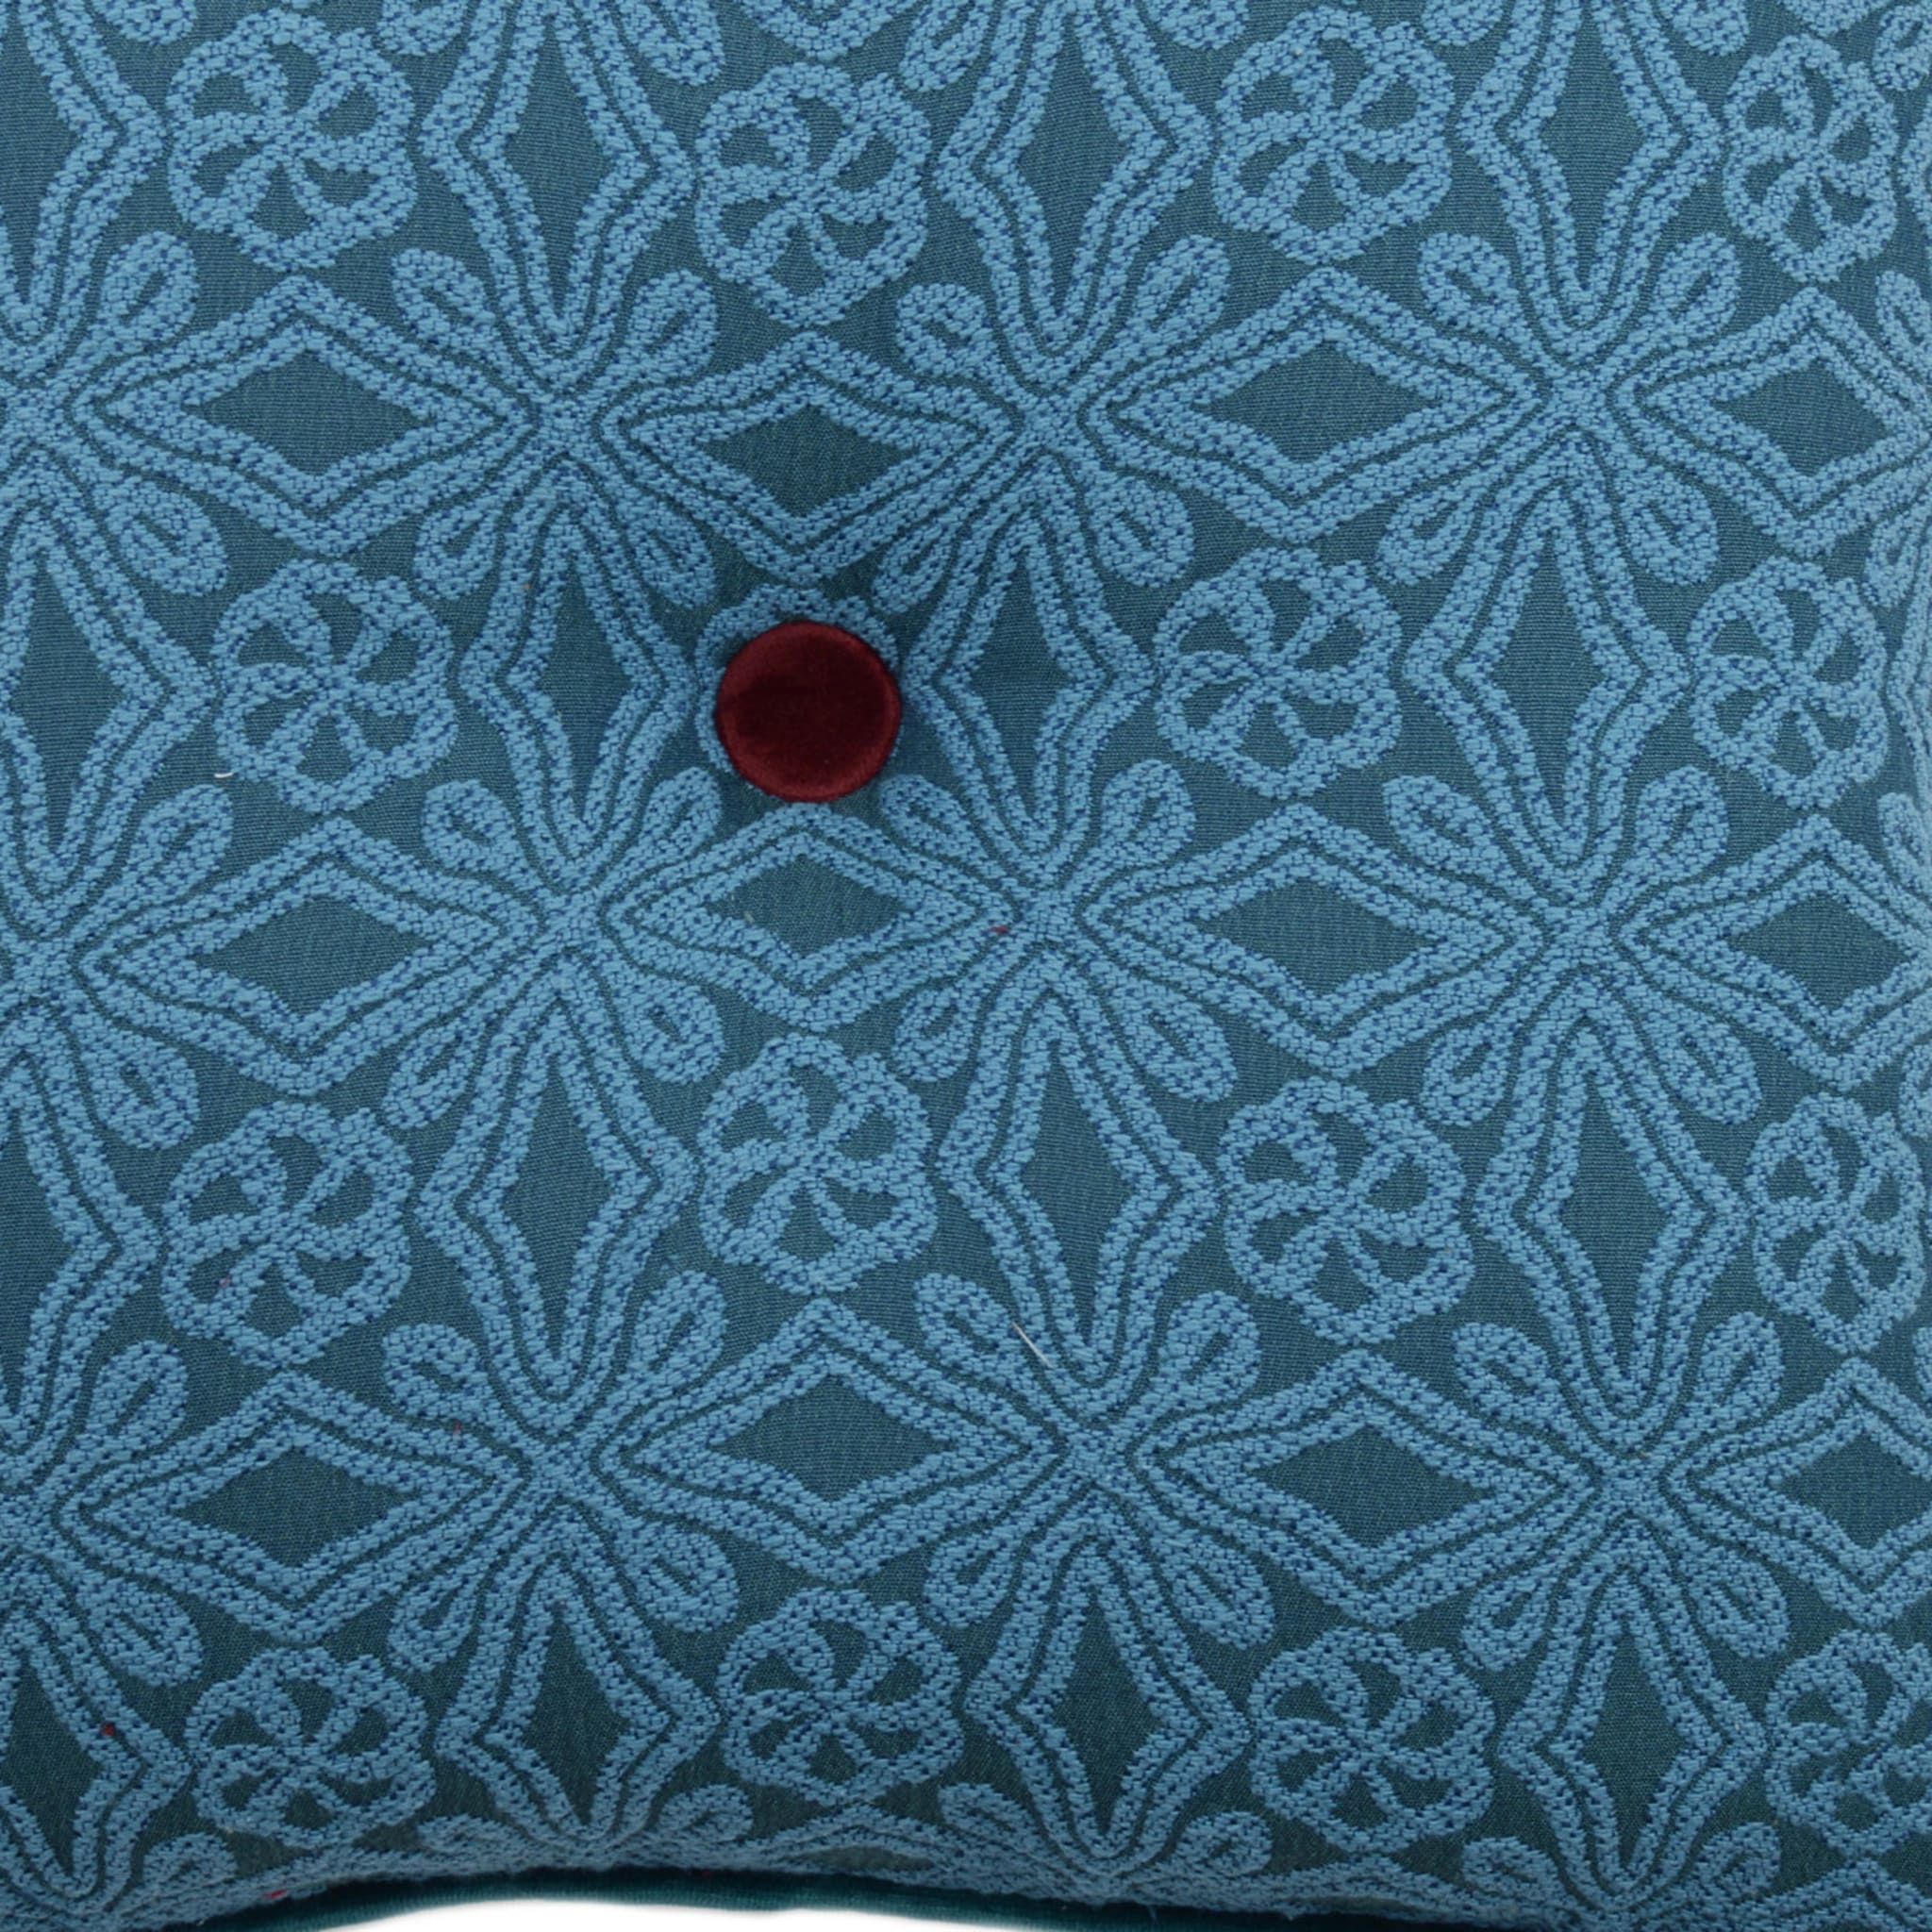 Light Blue Carré Cushion in floreal jacquard fabric - Alternative view 3